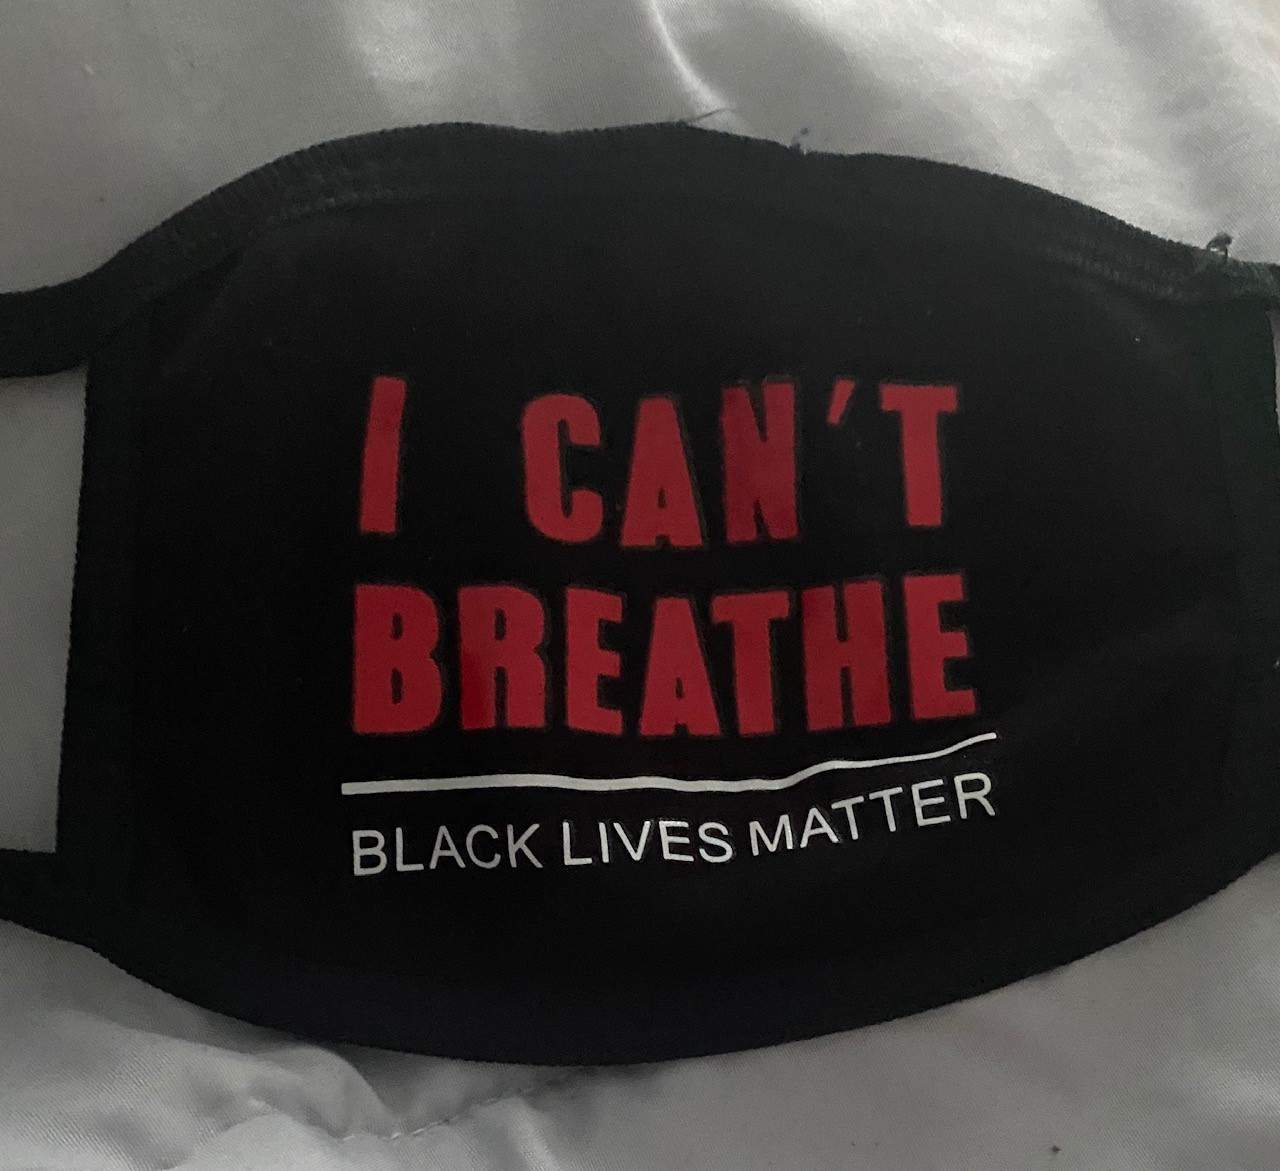 Bradford Middle student told to remove Black Lives Matter mask